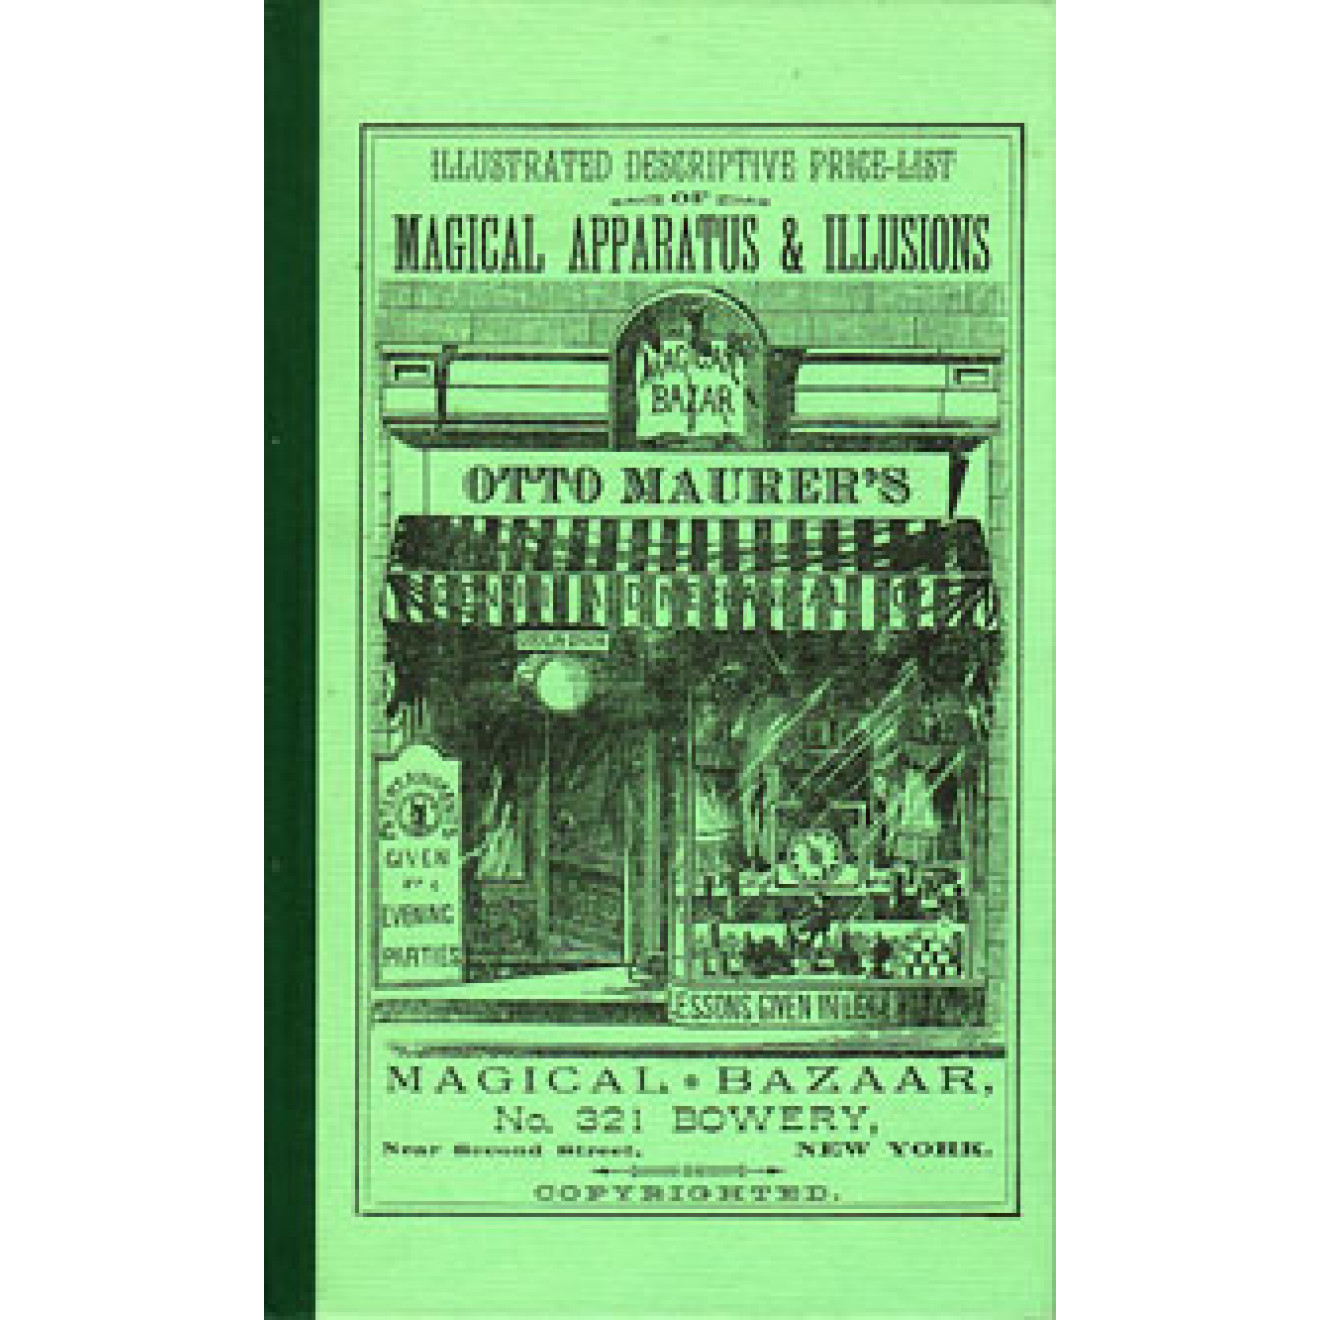 Illustrated Desciptive Price-List of Magical Apparatus & Ill. (Otto Maurer)